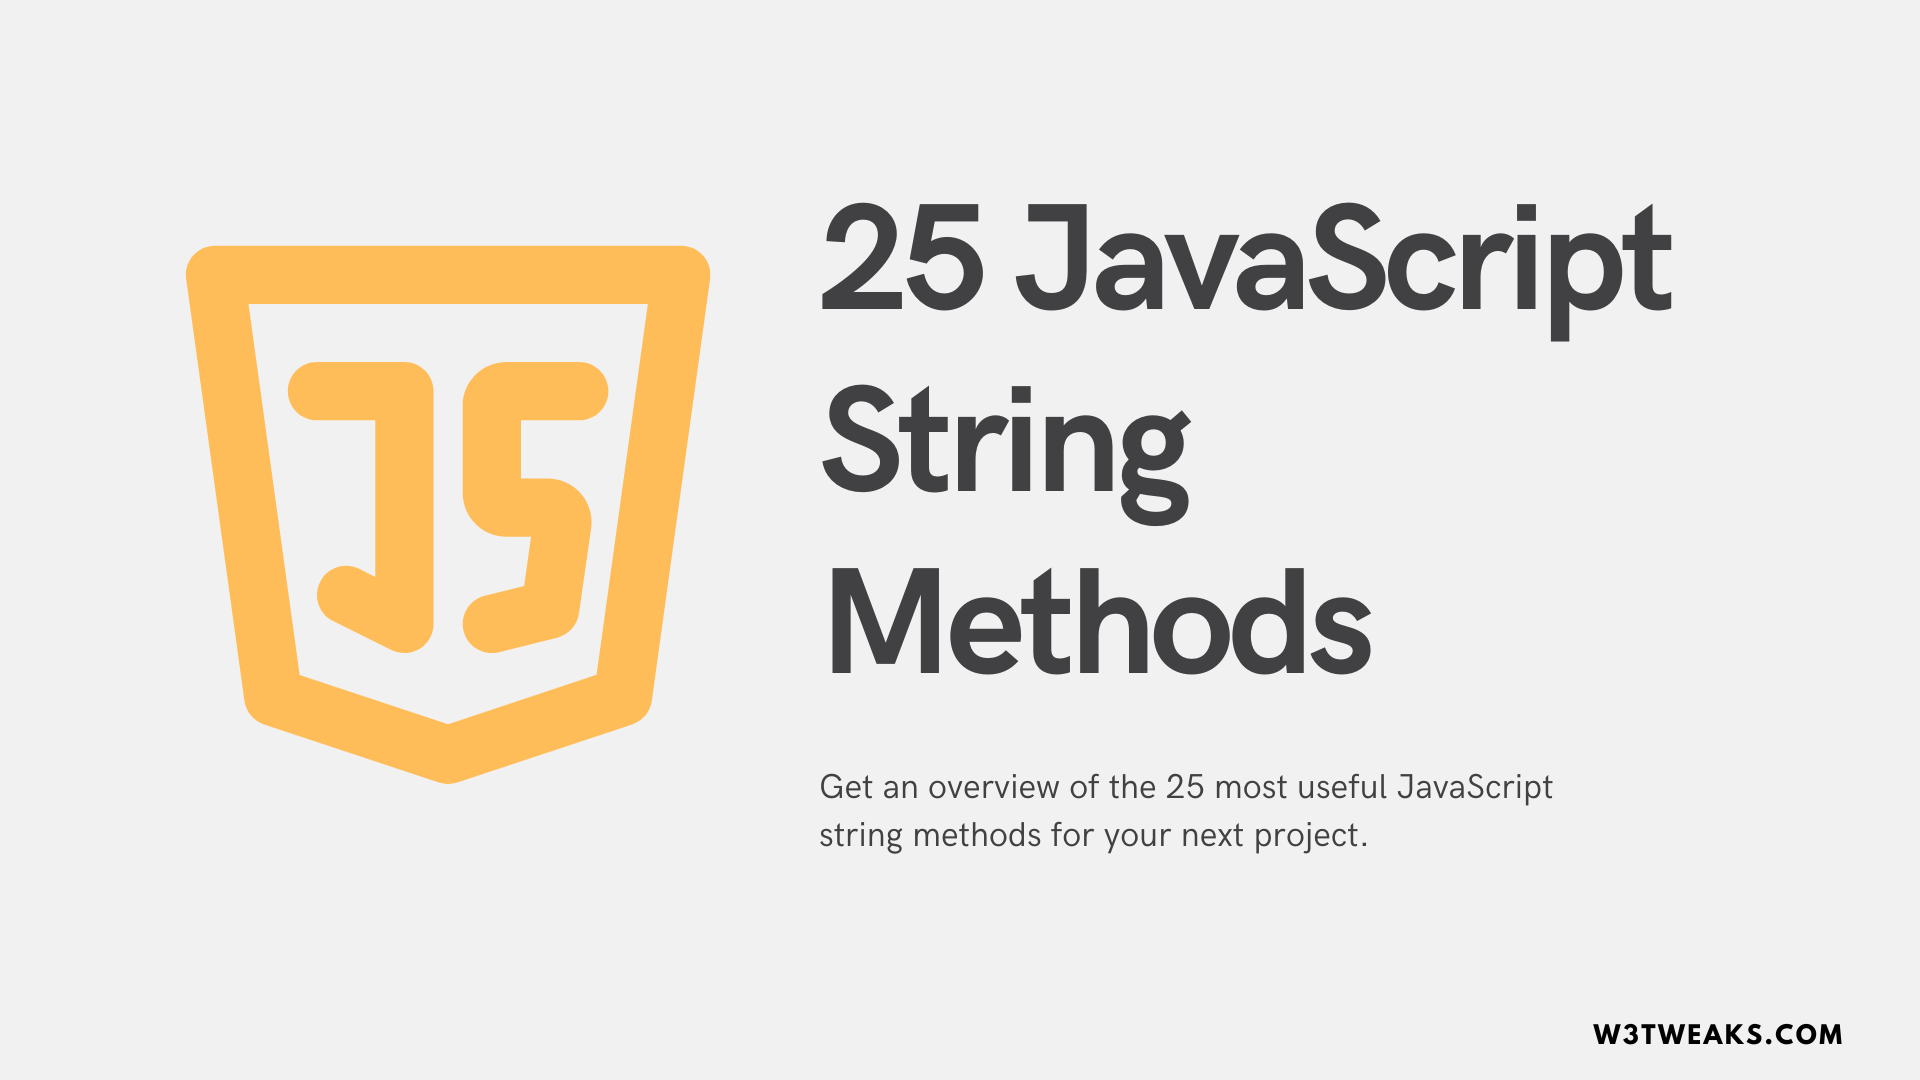 25 JavaScript String Methods